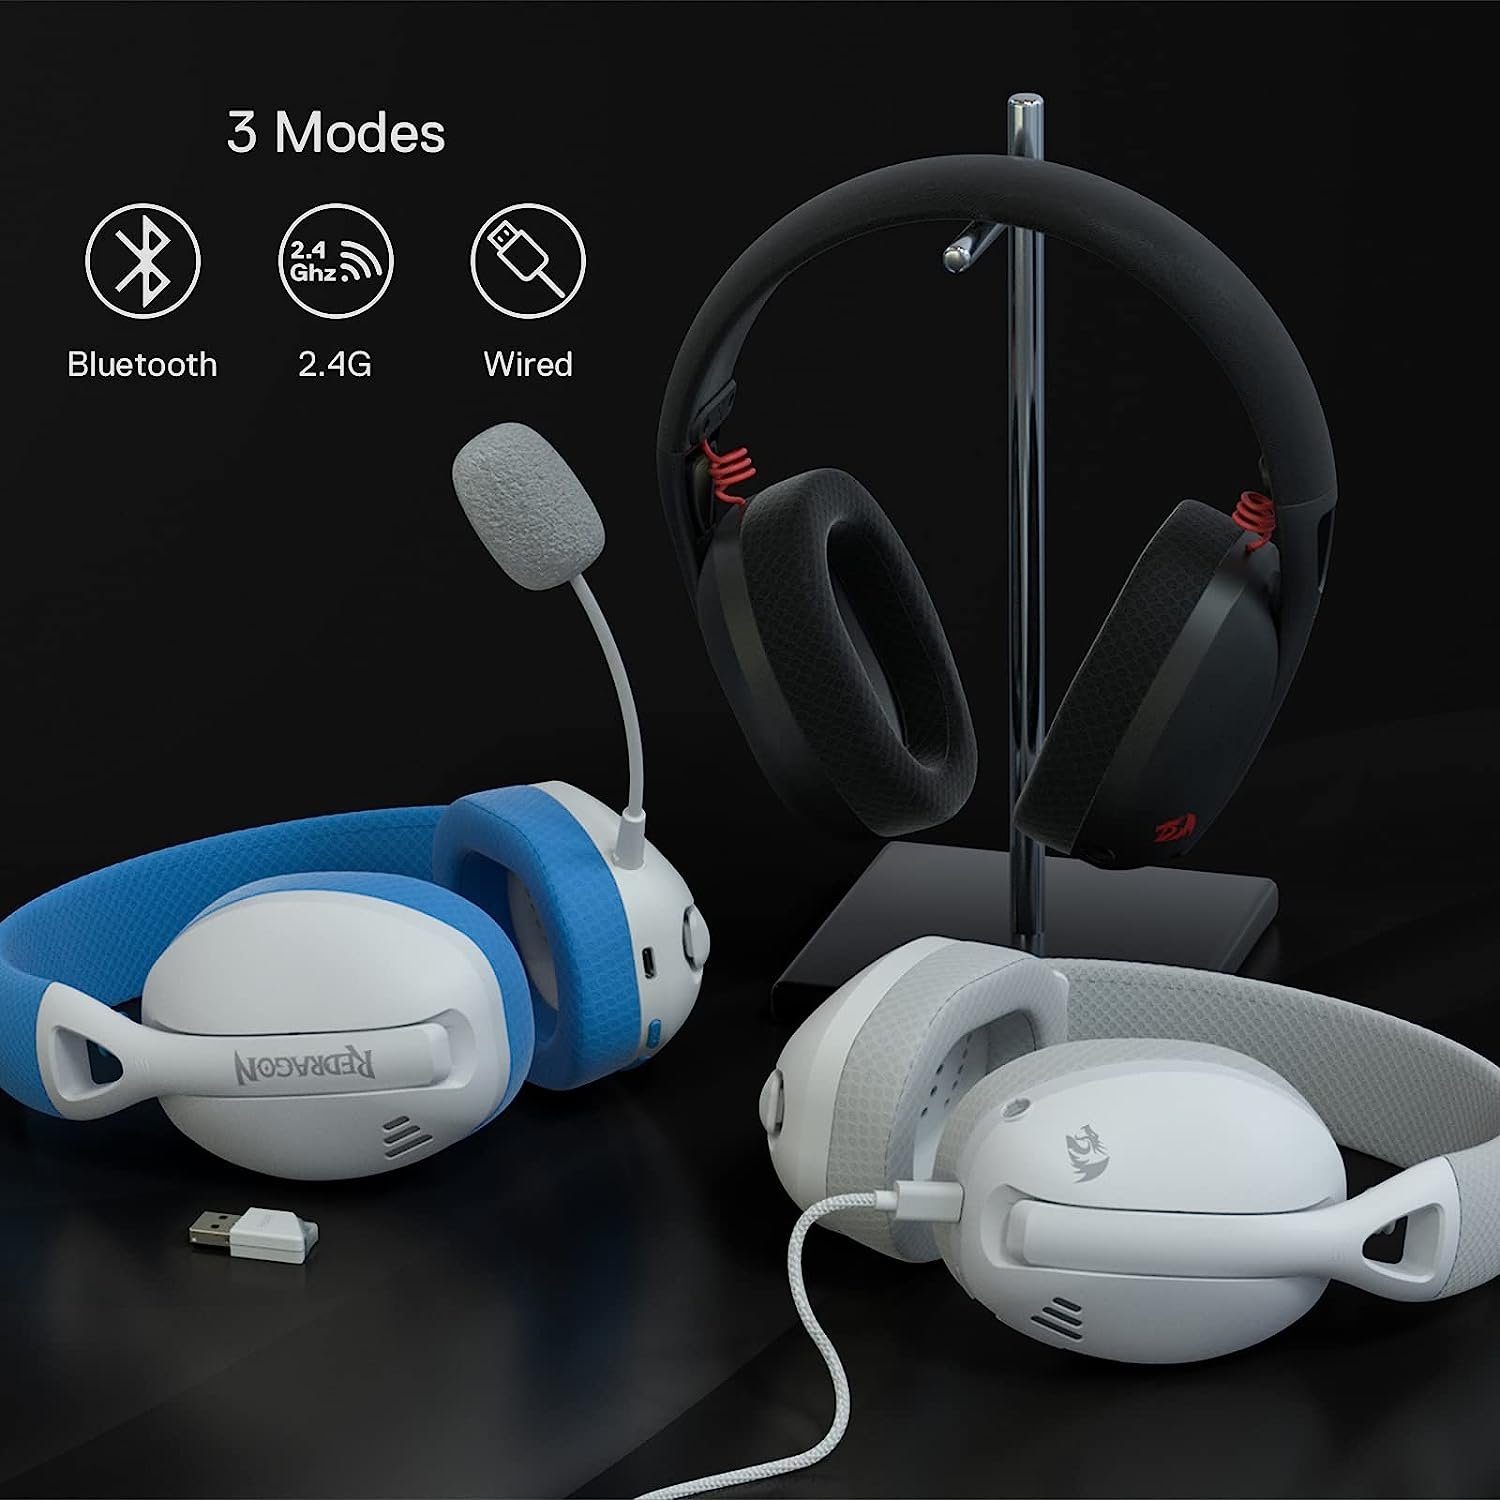 Sound Ultimatives H848 7.1 Komfort Redragon Surround Gaming-Headset: Treiber., Gaming-Headset (Drahtloses & Klang, mit Gaming-Headset Vielseitigkeit) RGB-Beleuchtung. 40mm